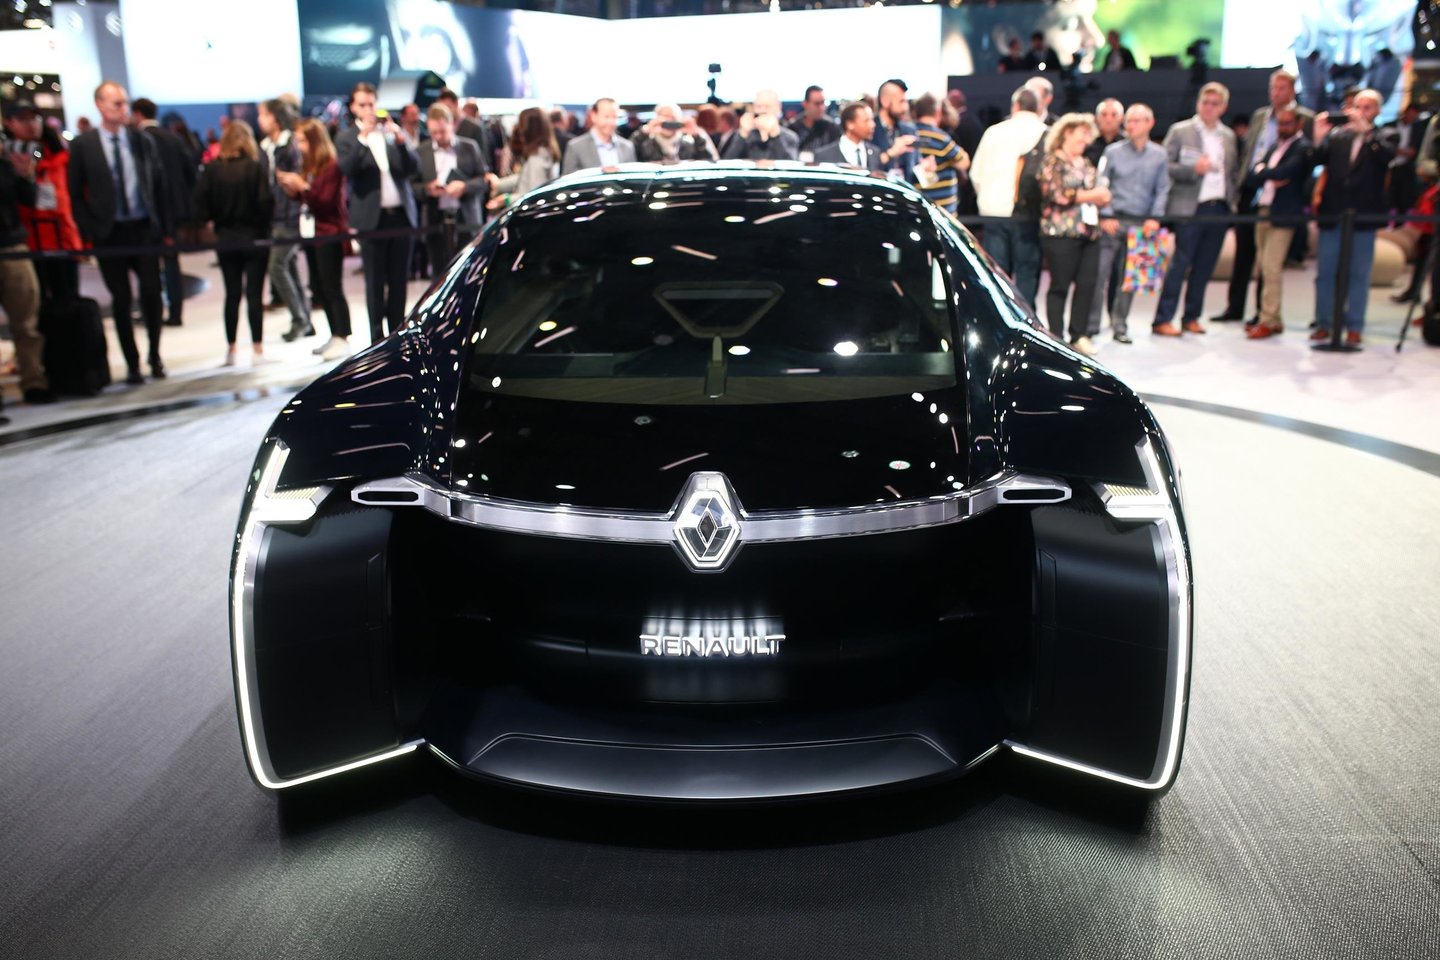  „Renault Ez-Ultimo“ koncepcinis autonominis automobilis.<br> newspress.co.uk nuotr.